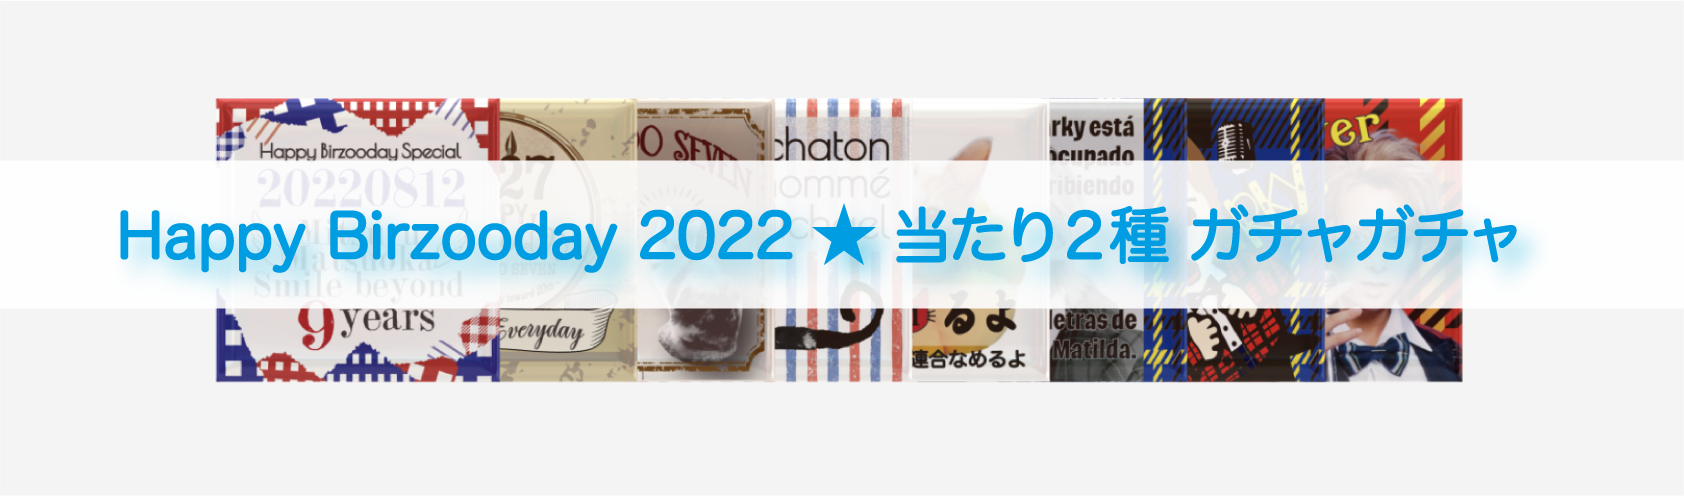 【Happy Birzooday 2022】当たり付き_ガチャガチャ